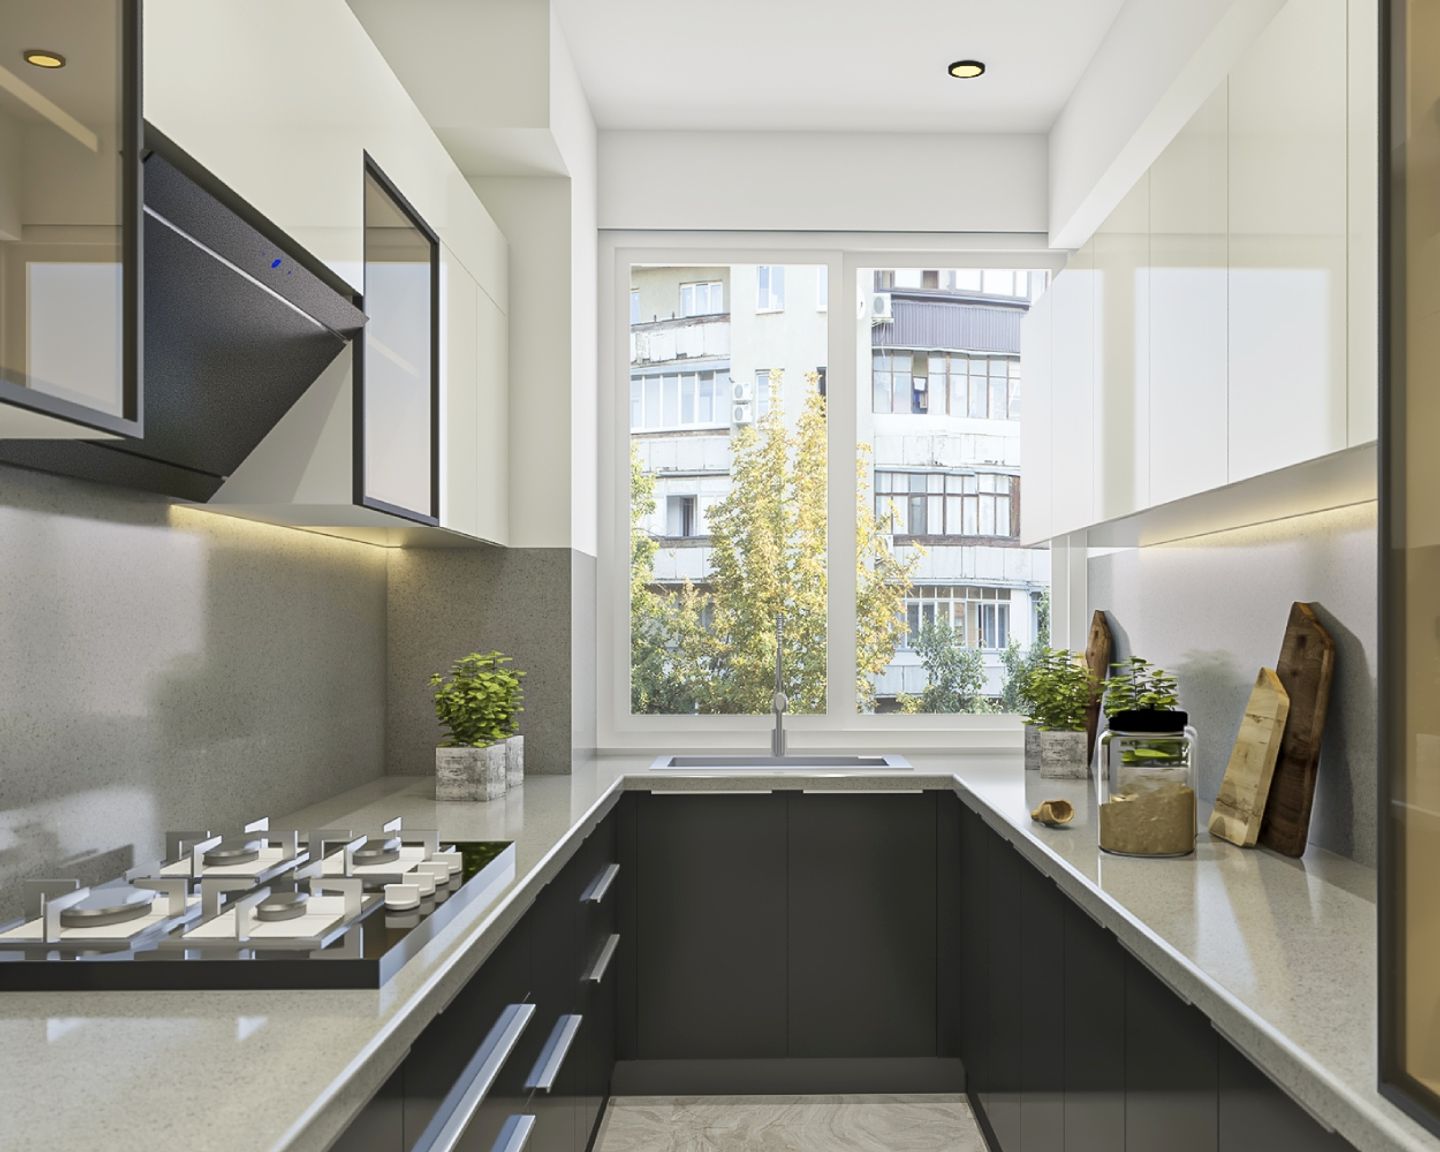 U-Shaped White And Dark Grey Modular Kitchen Design With Light Grey Kitchen Countertop And Backsplash - Livspace